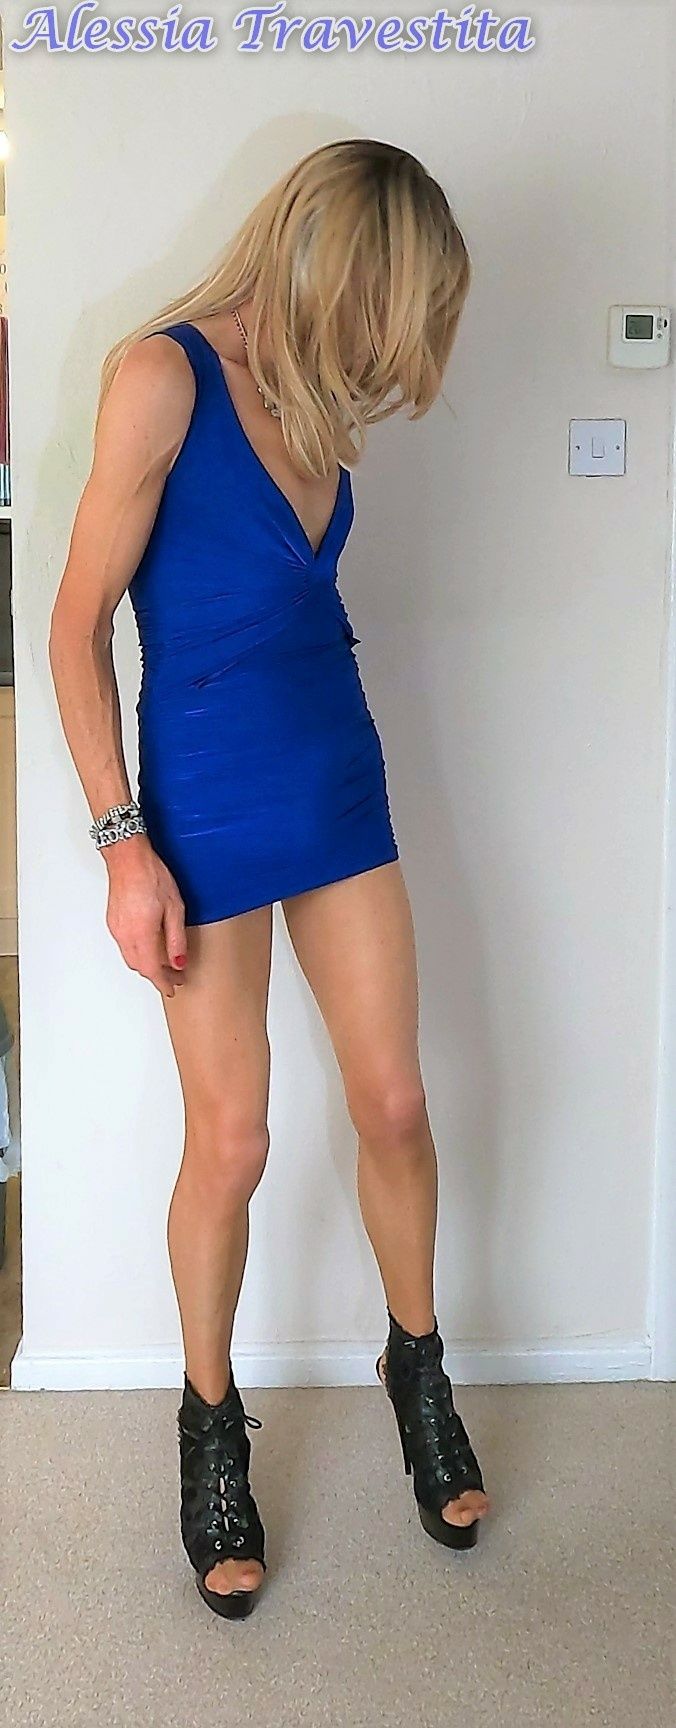 77 Alessia Travestita in Blue Italian Designer Dress #19